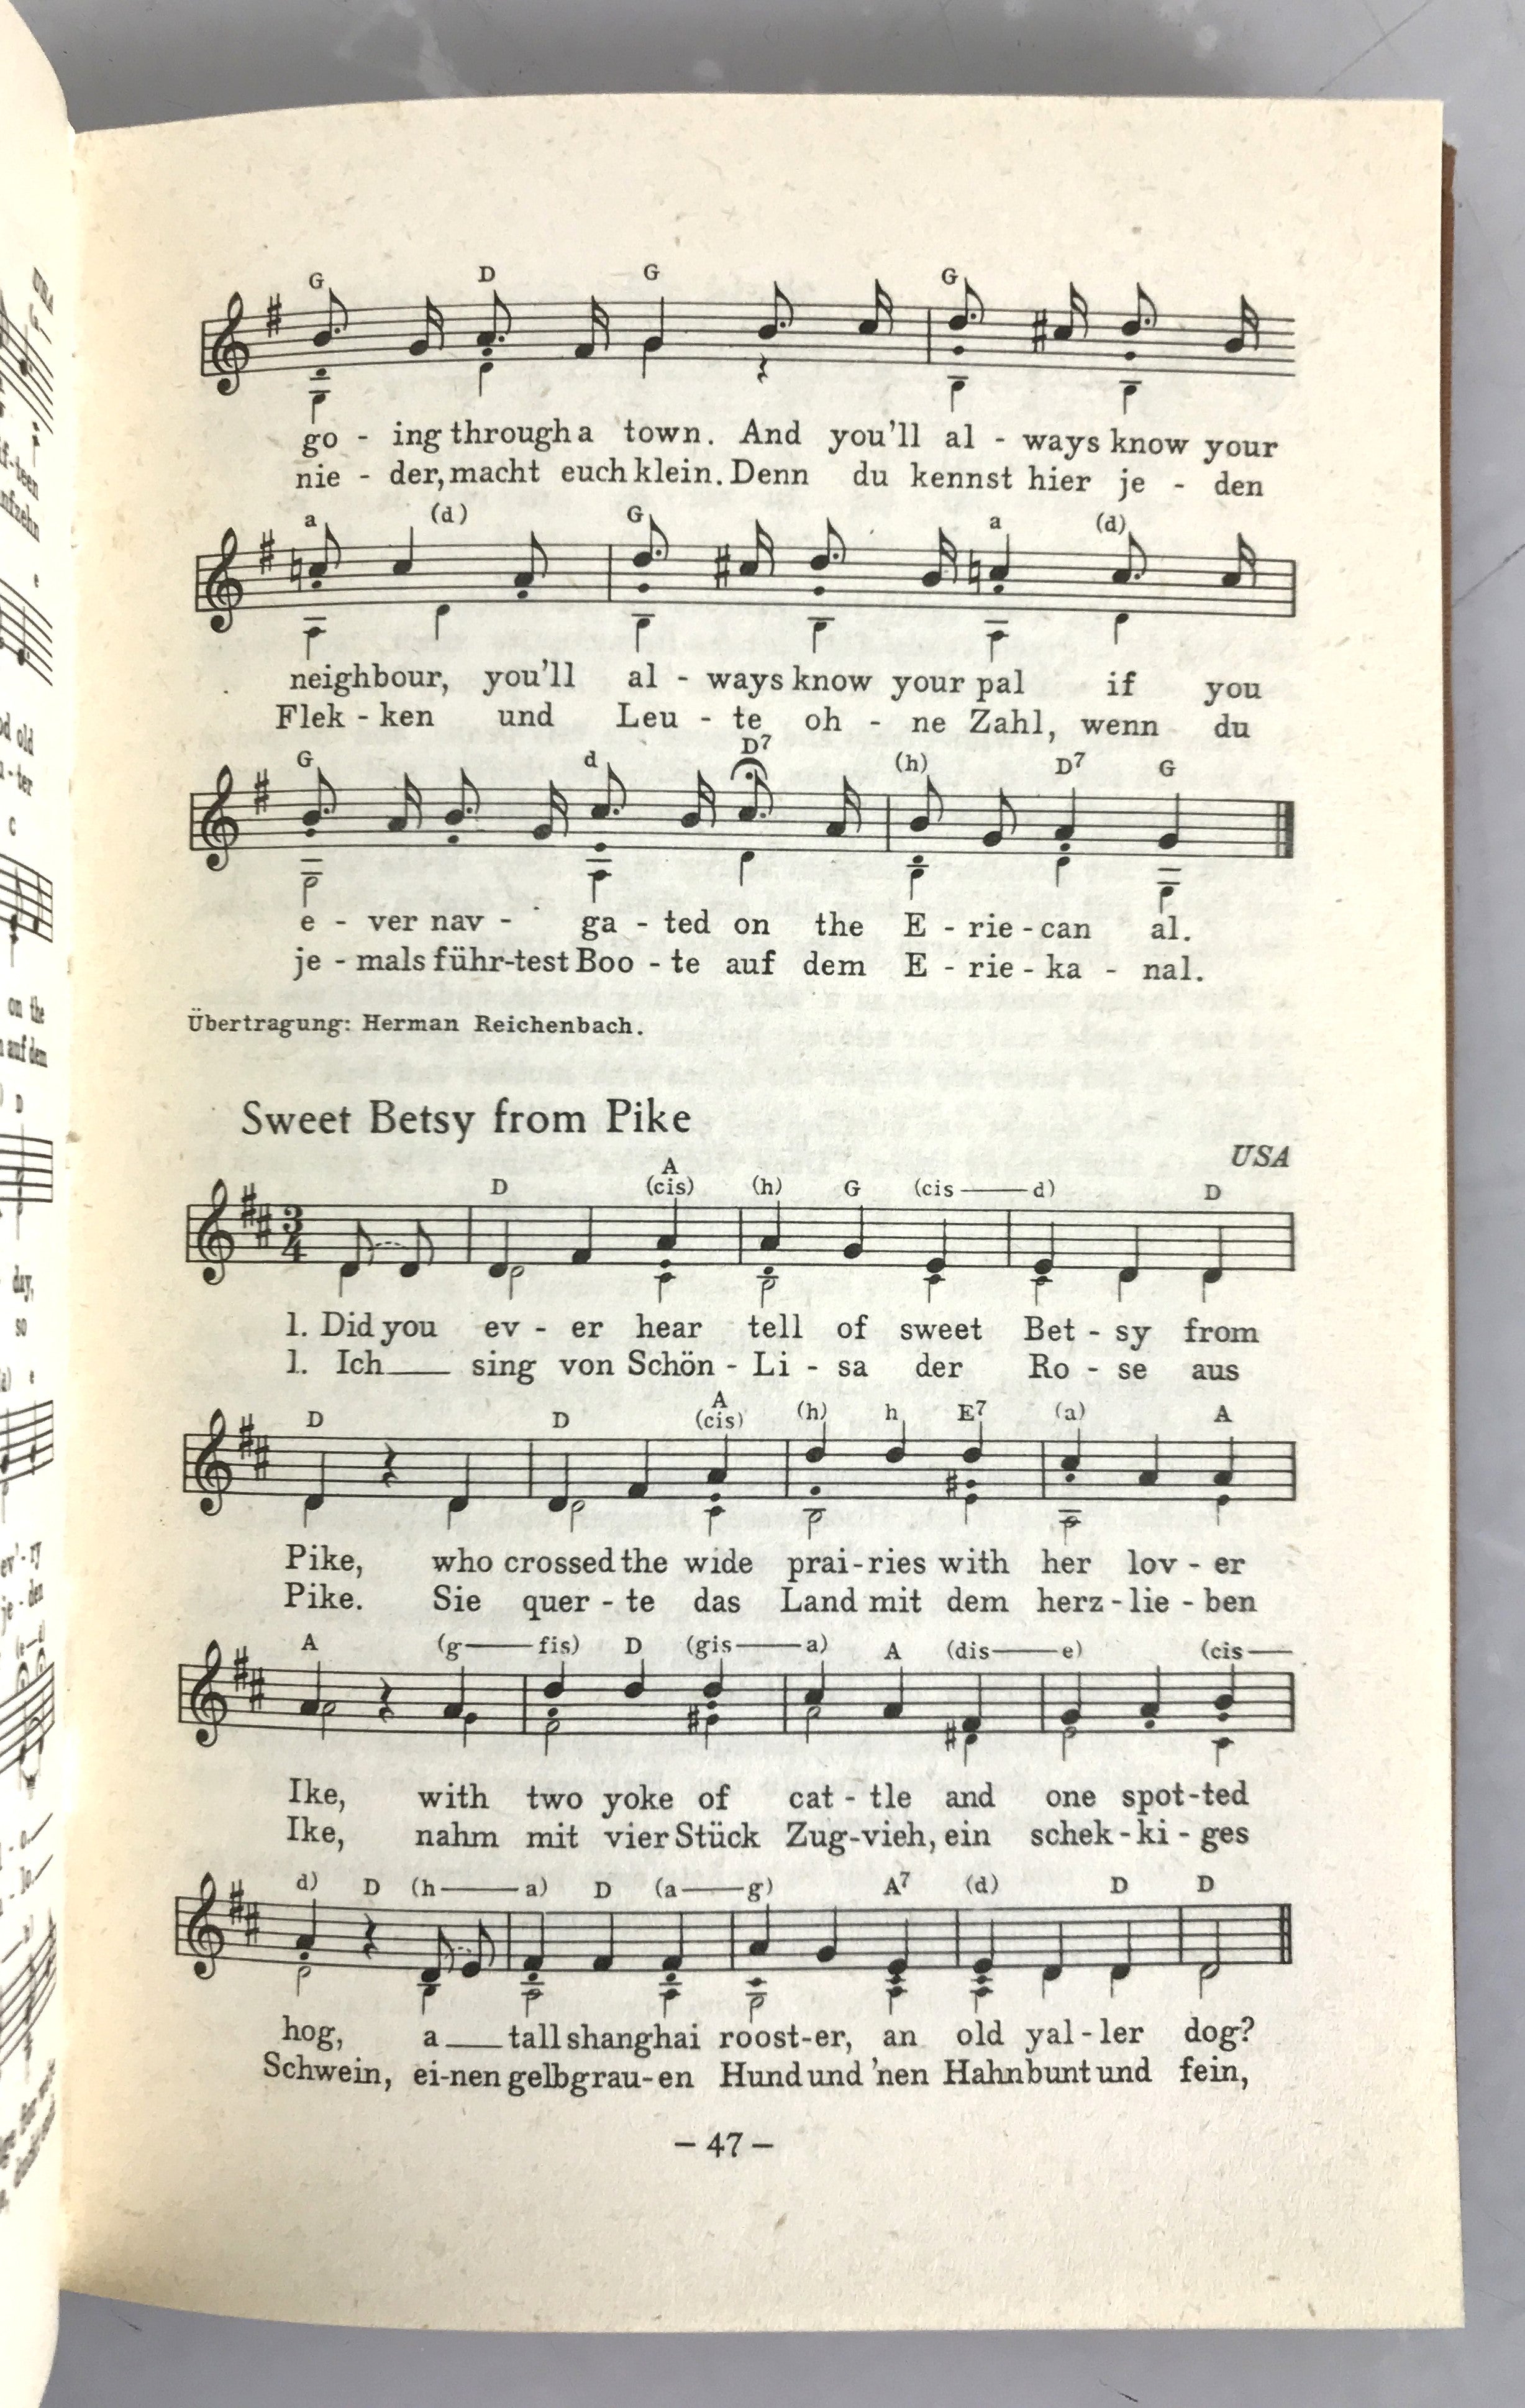 Pro Musica Liederbuch (Songbook) in German by Jode and Gundlach 1961 HC